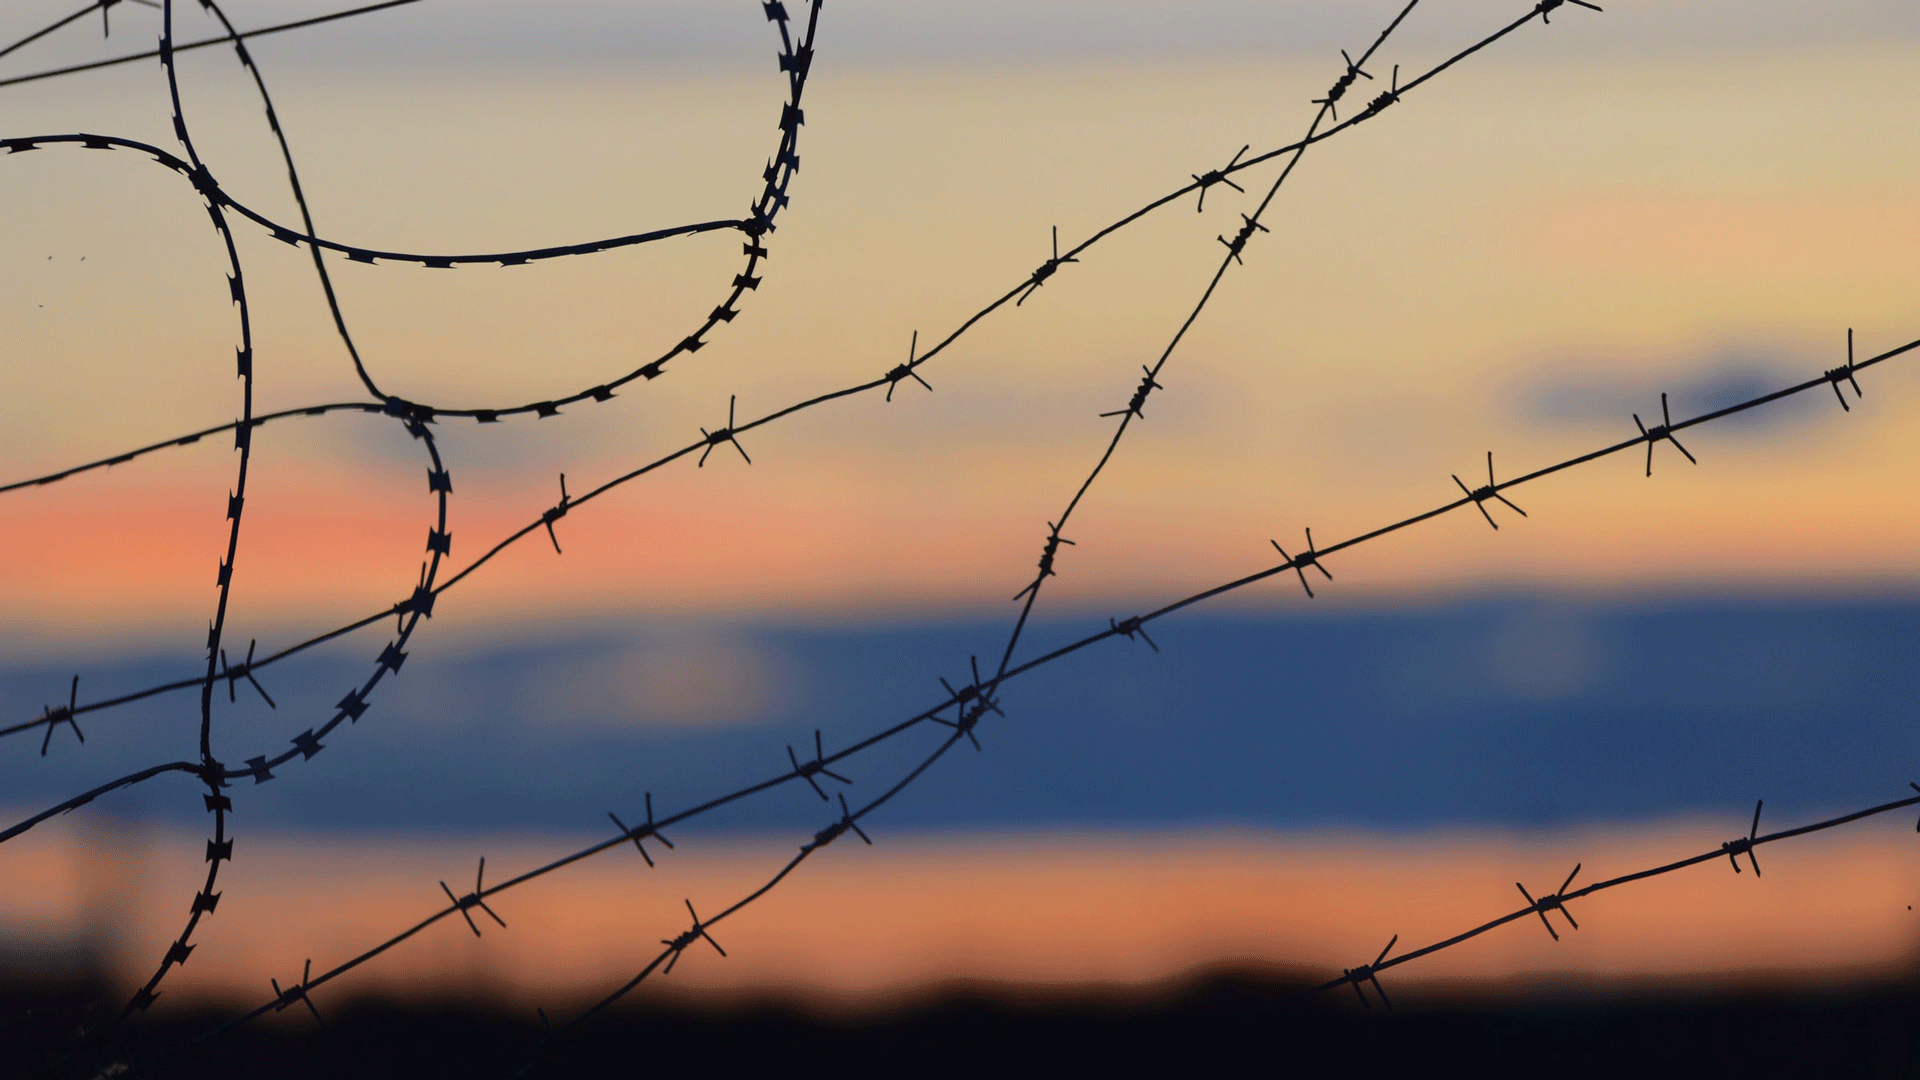 Razor wire at sunset